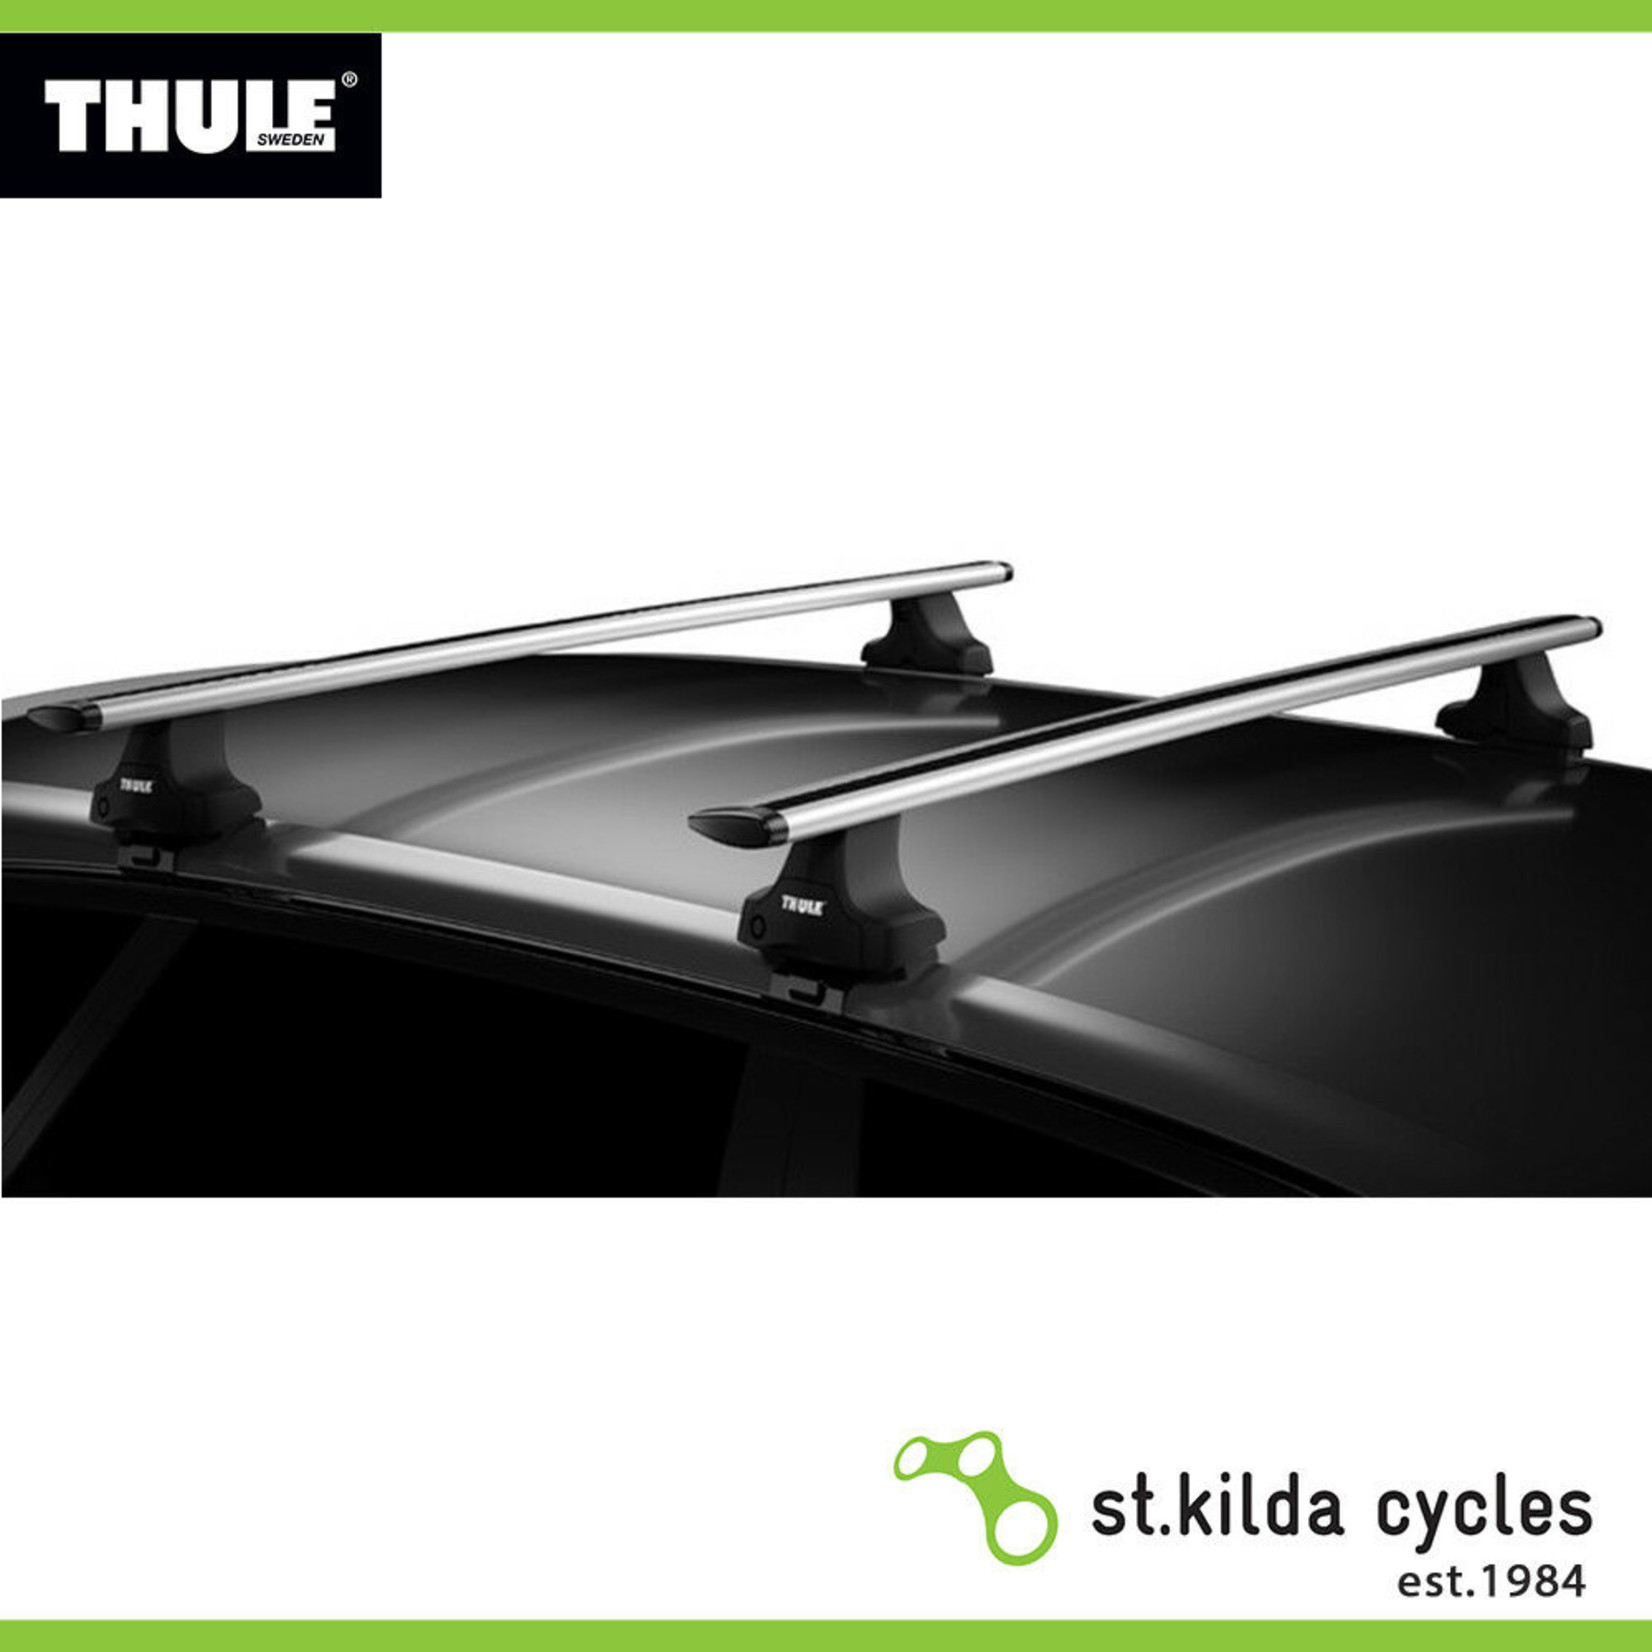 Thule Thule Roof Rack - Rapid System 754002 - Black Maximum load - 75 kg